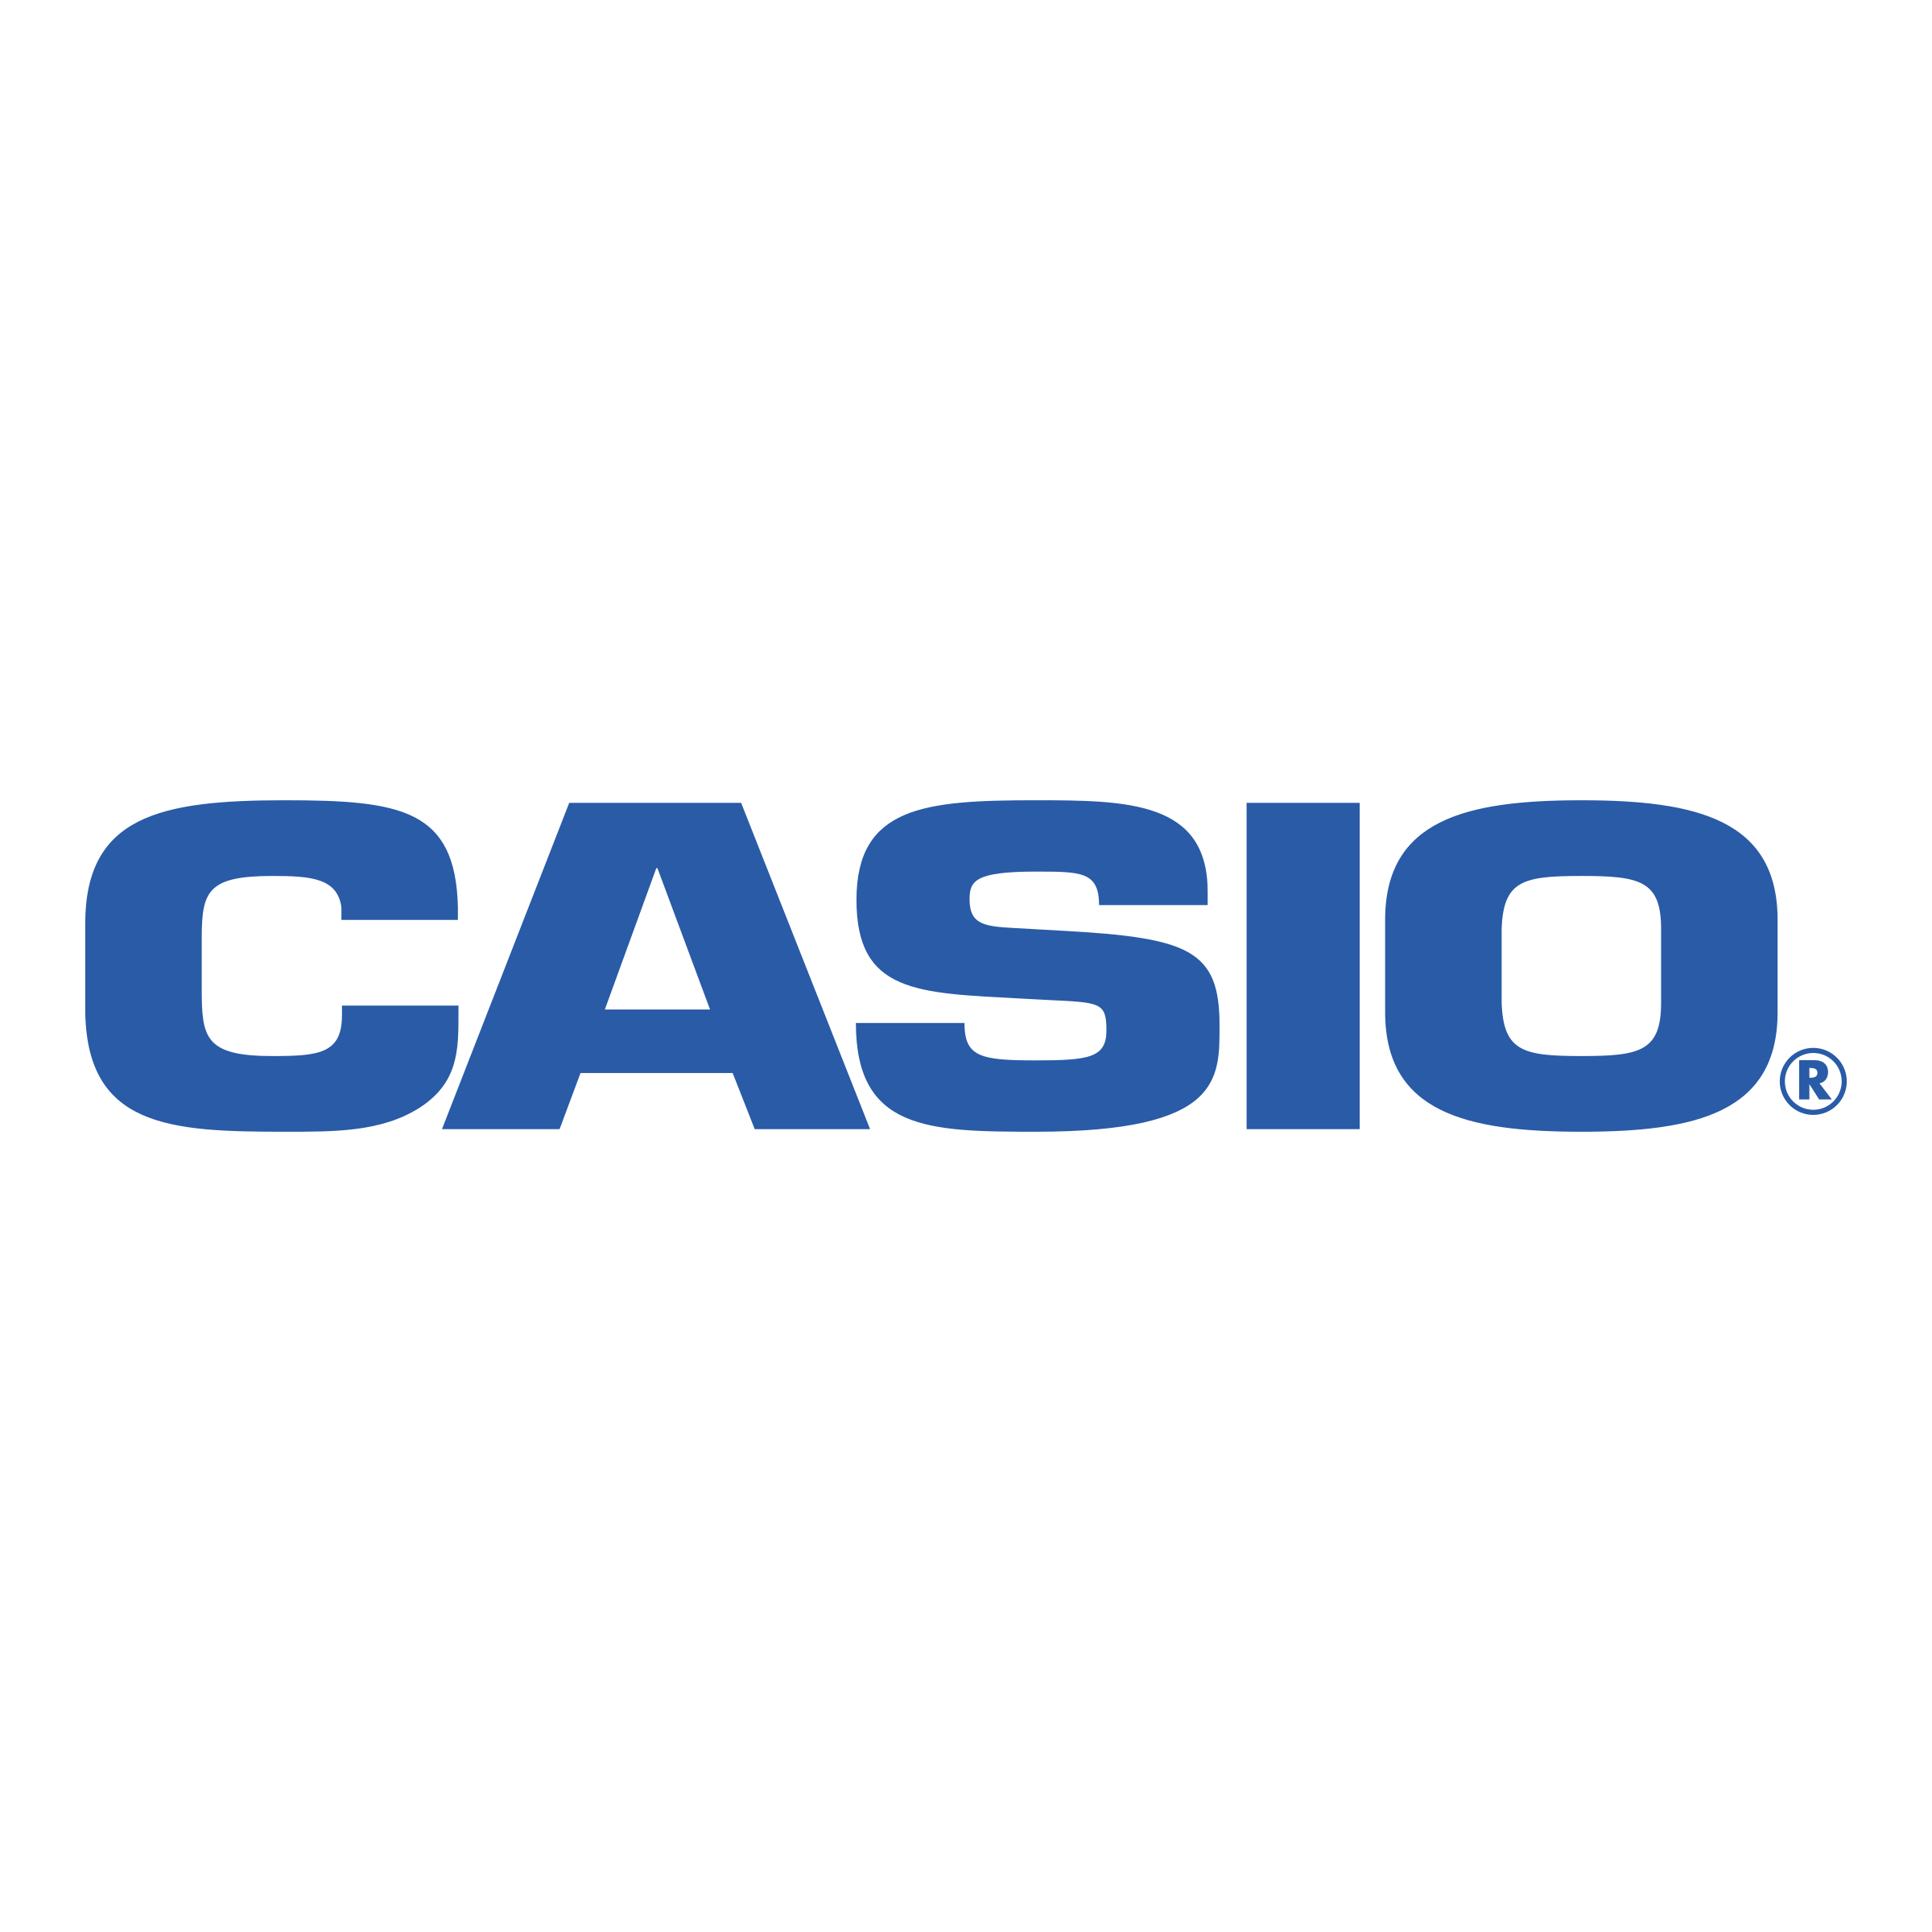 Casio Logo - Casio Logo PNG Transparent & SVG Vector - Freebie Supply